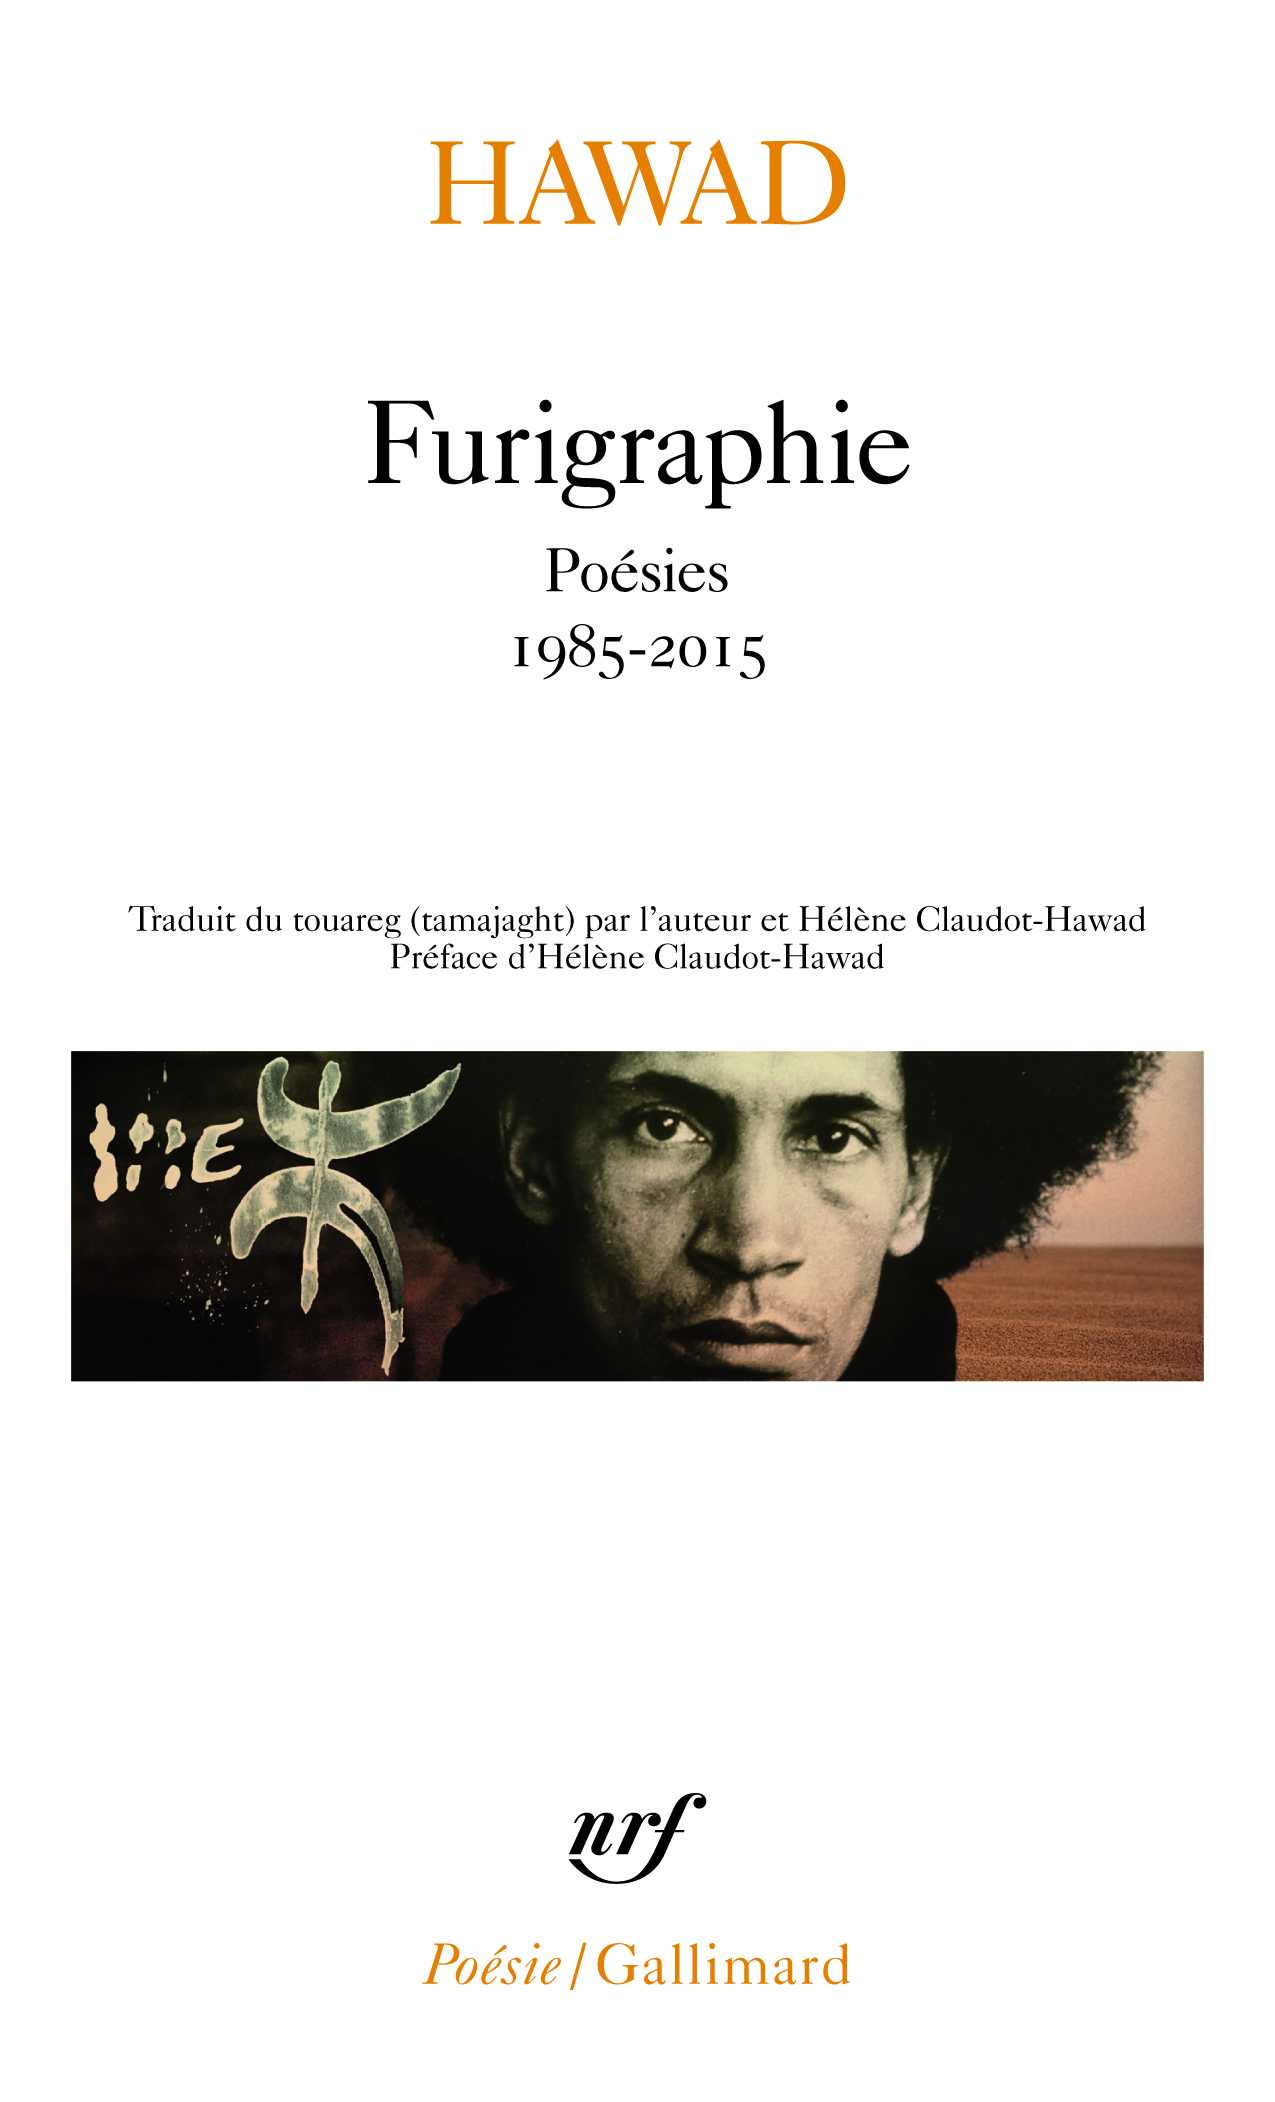 FURIGRAPHIE
Poésies, 1985-2015

Coll. Poésie/Gallimard 
(n° 522), Gallimard
Parution : 09-03-2017